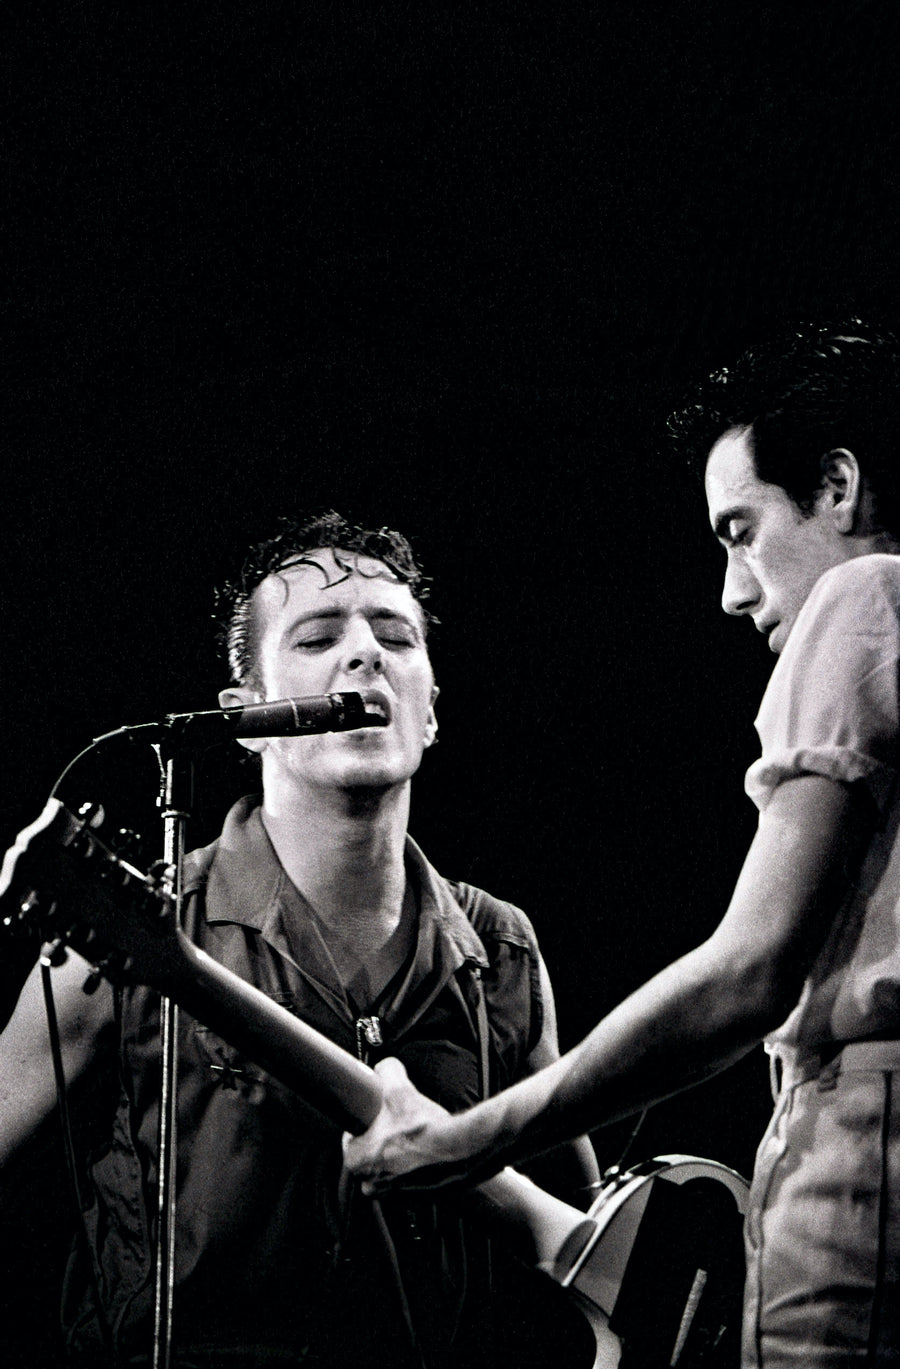 Steve Rapport "Joe Strummer and Mick Jones of The Clash / The Lyceum" (1981)